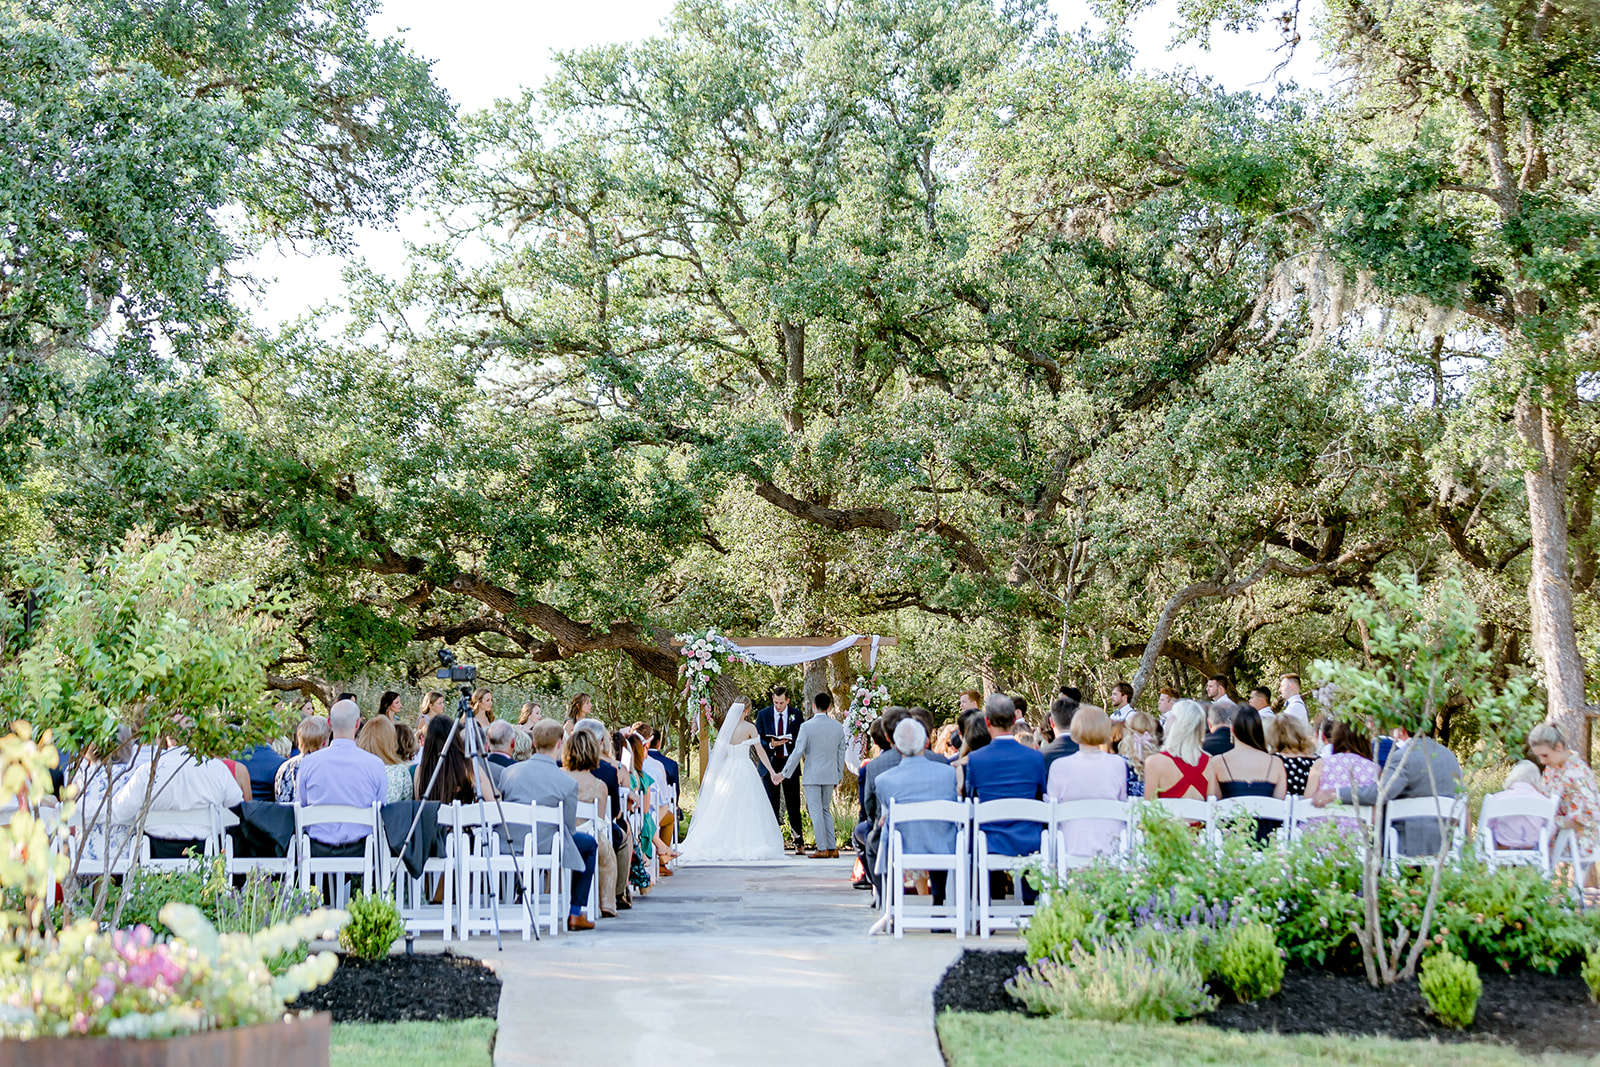 outdoor ceremony, canopy of trees, garden wedding